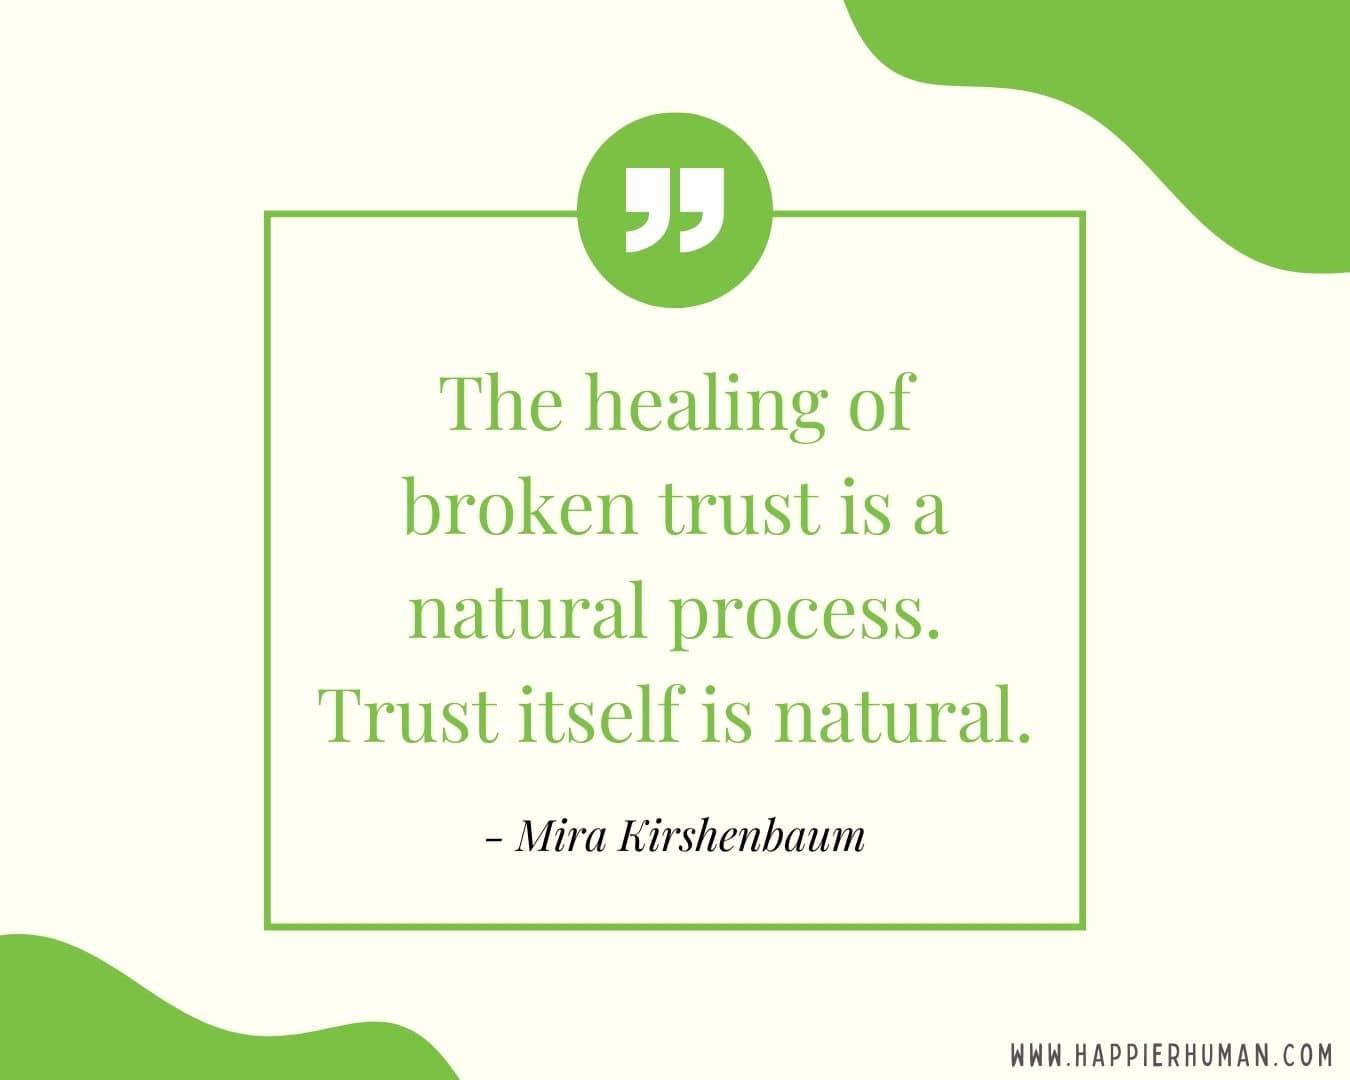 Broken Trust Quotes - “The healing of broken trust is a natural process. Trust itself is natural.” - Mira Kirshenbaum